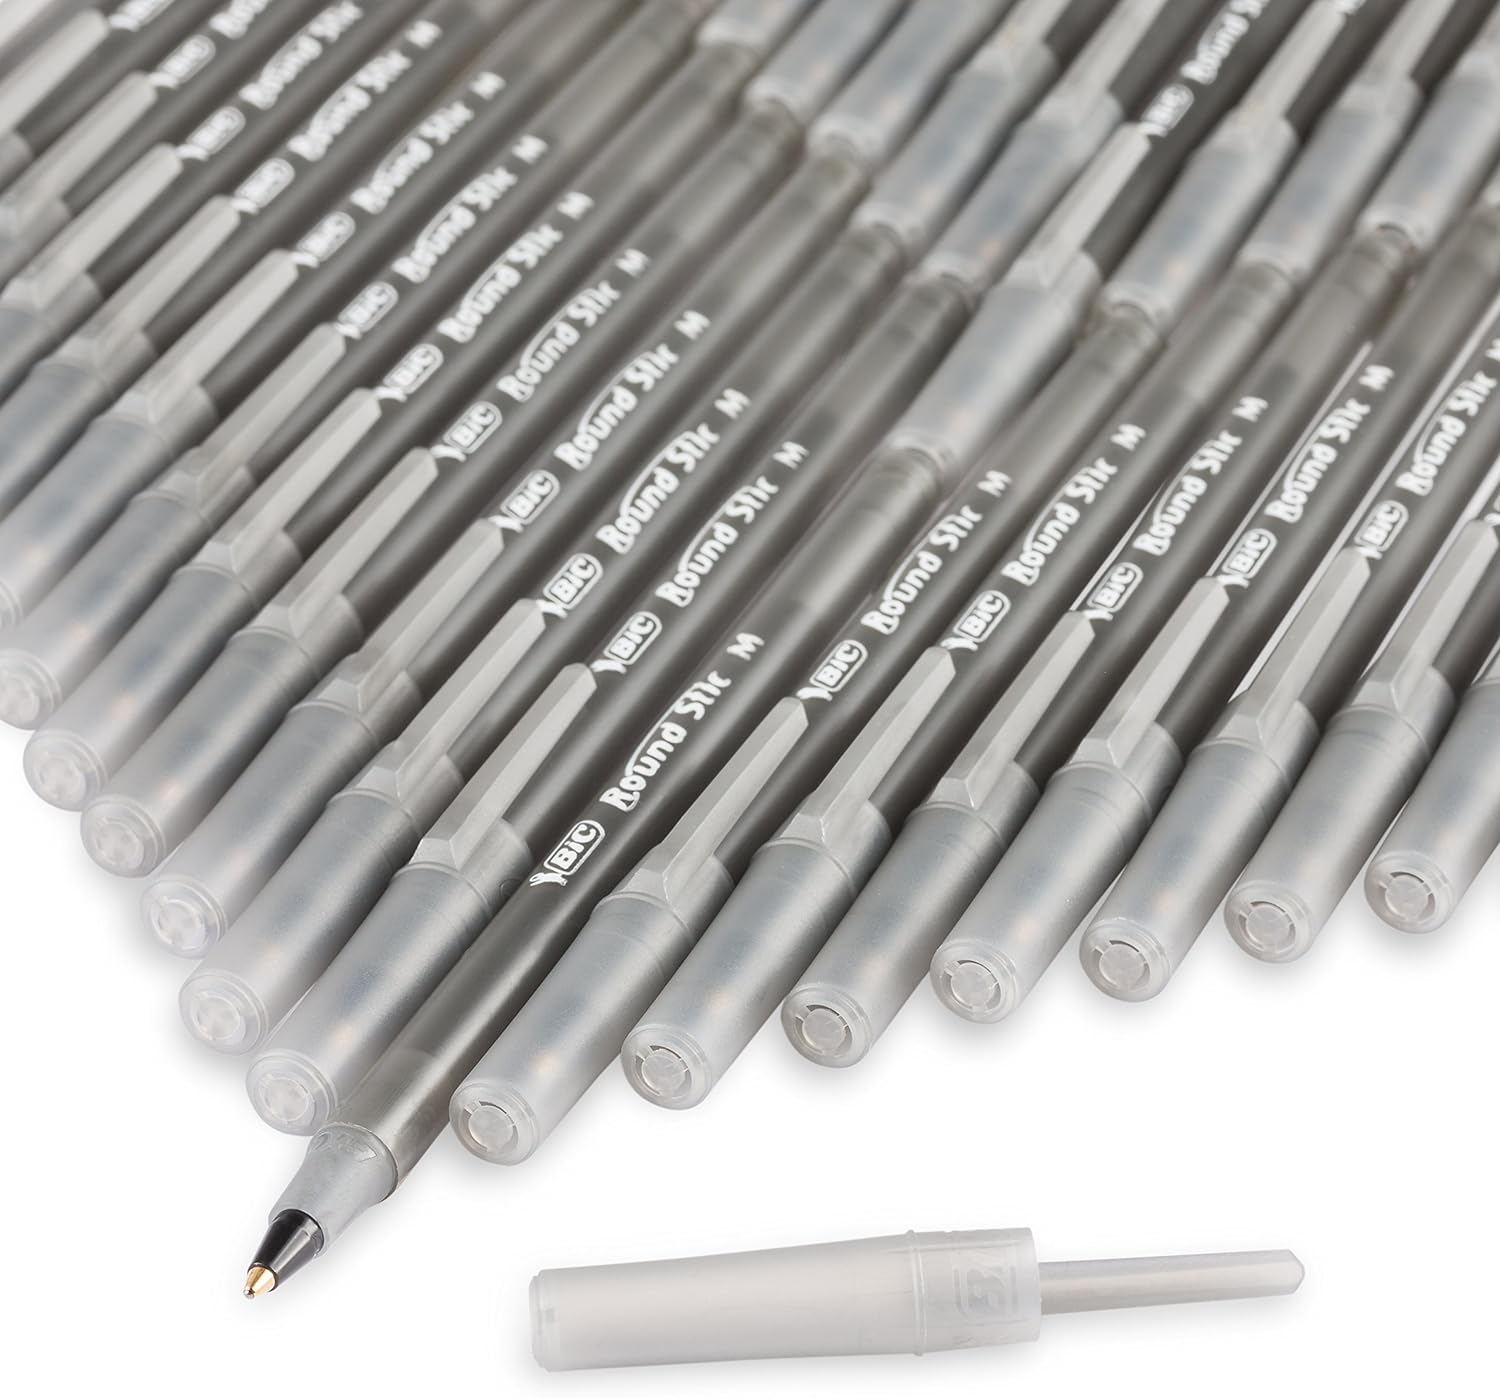 BIC Round Stic Xtra Life Ballpoint Pen, Medium Point (1.0mm) -- Pack of 216 Black Pens